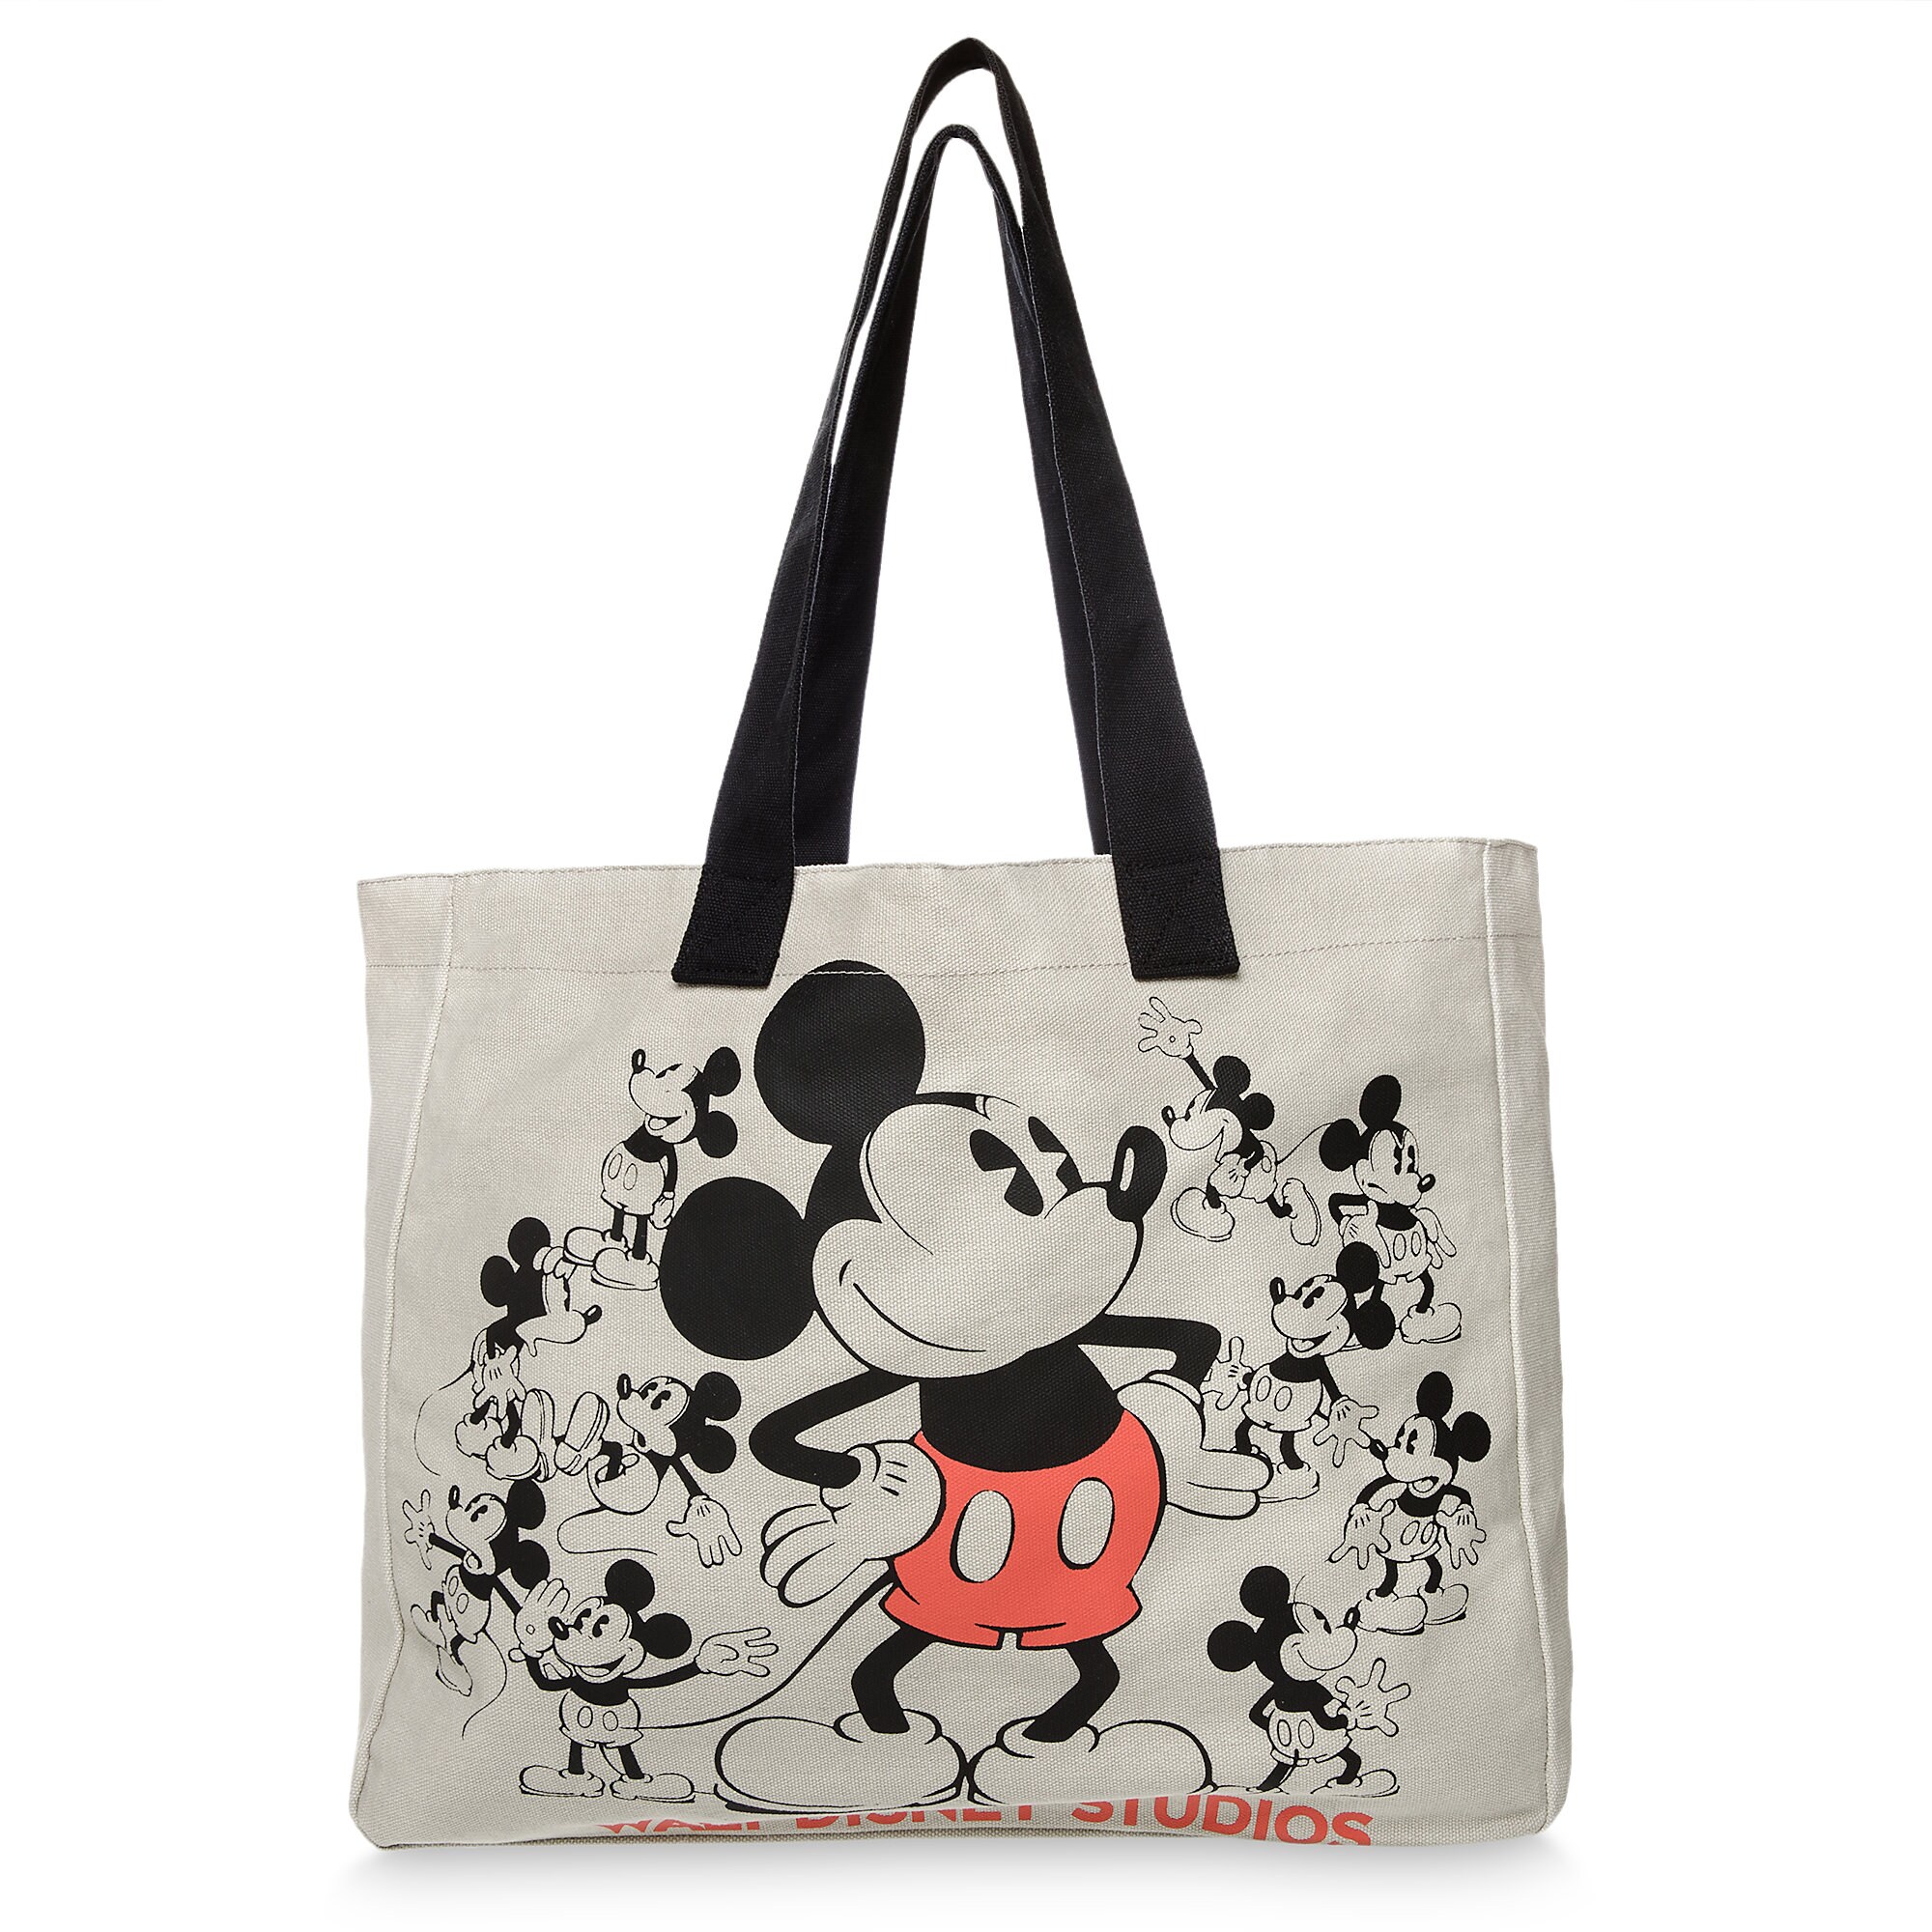 Mickey Mouse Walt Disney Studios Tote Bag